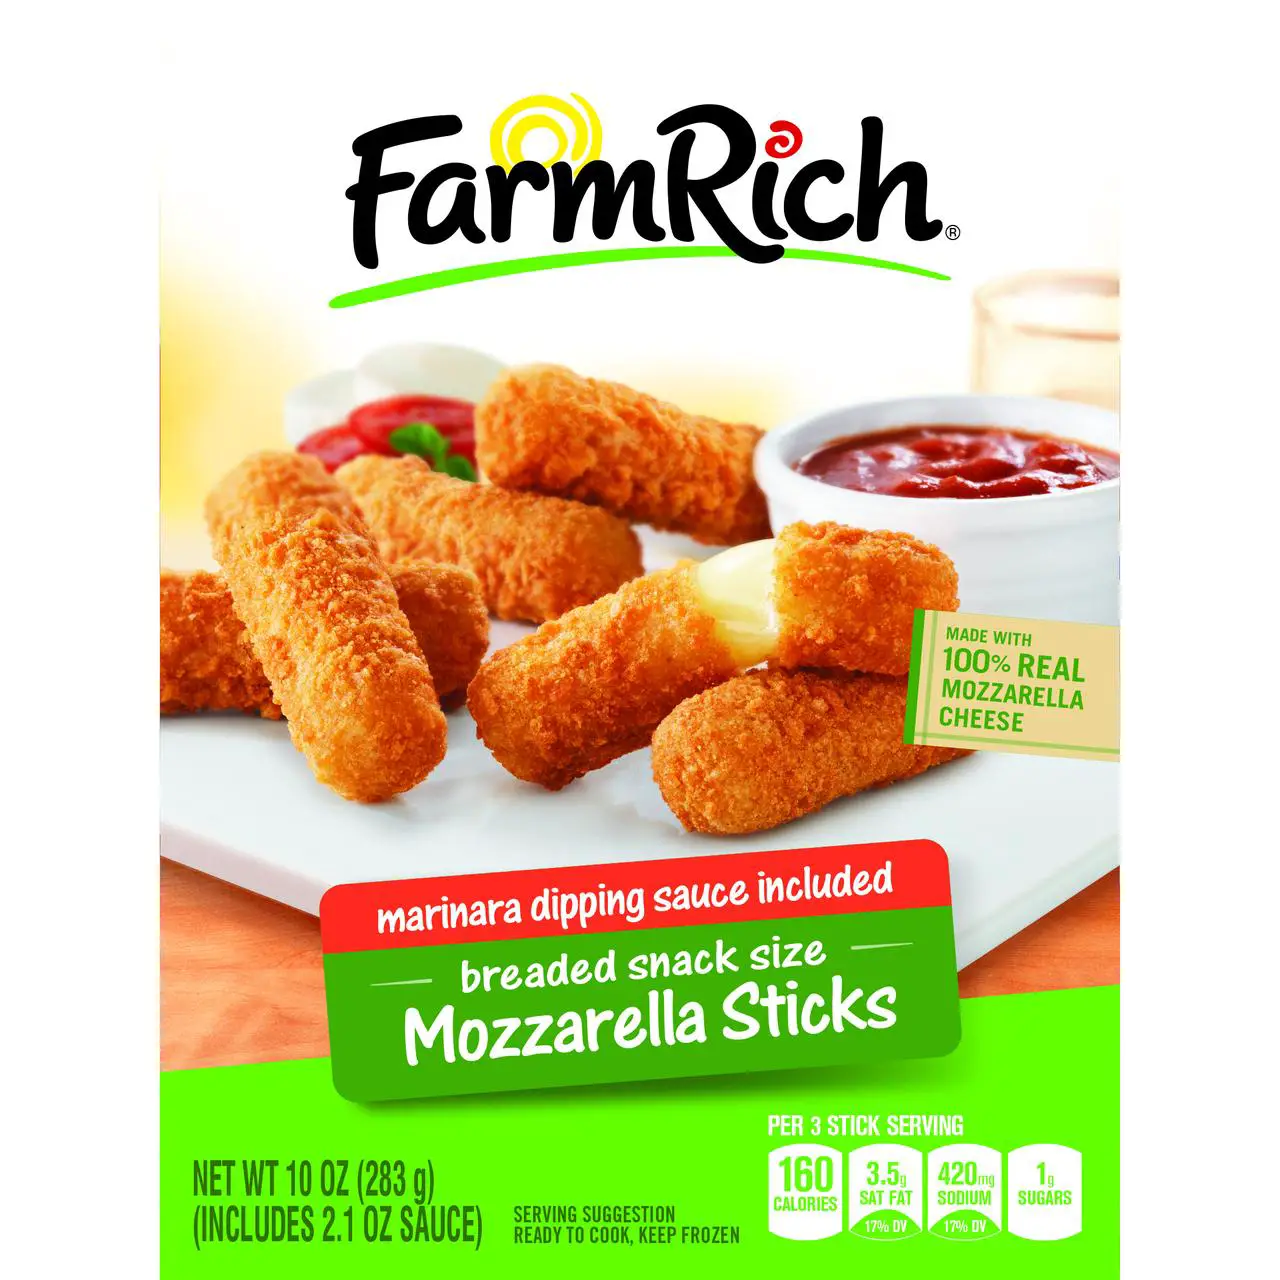 Farm Rich Mozzarella Sticks Nutrition Information See More on ...